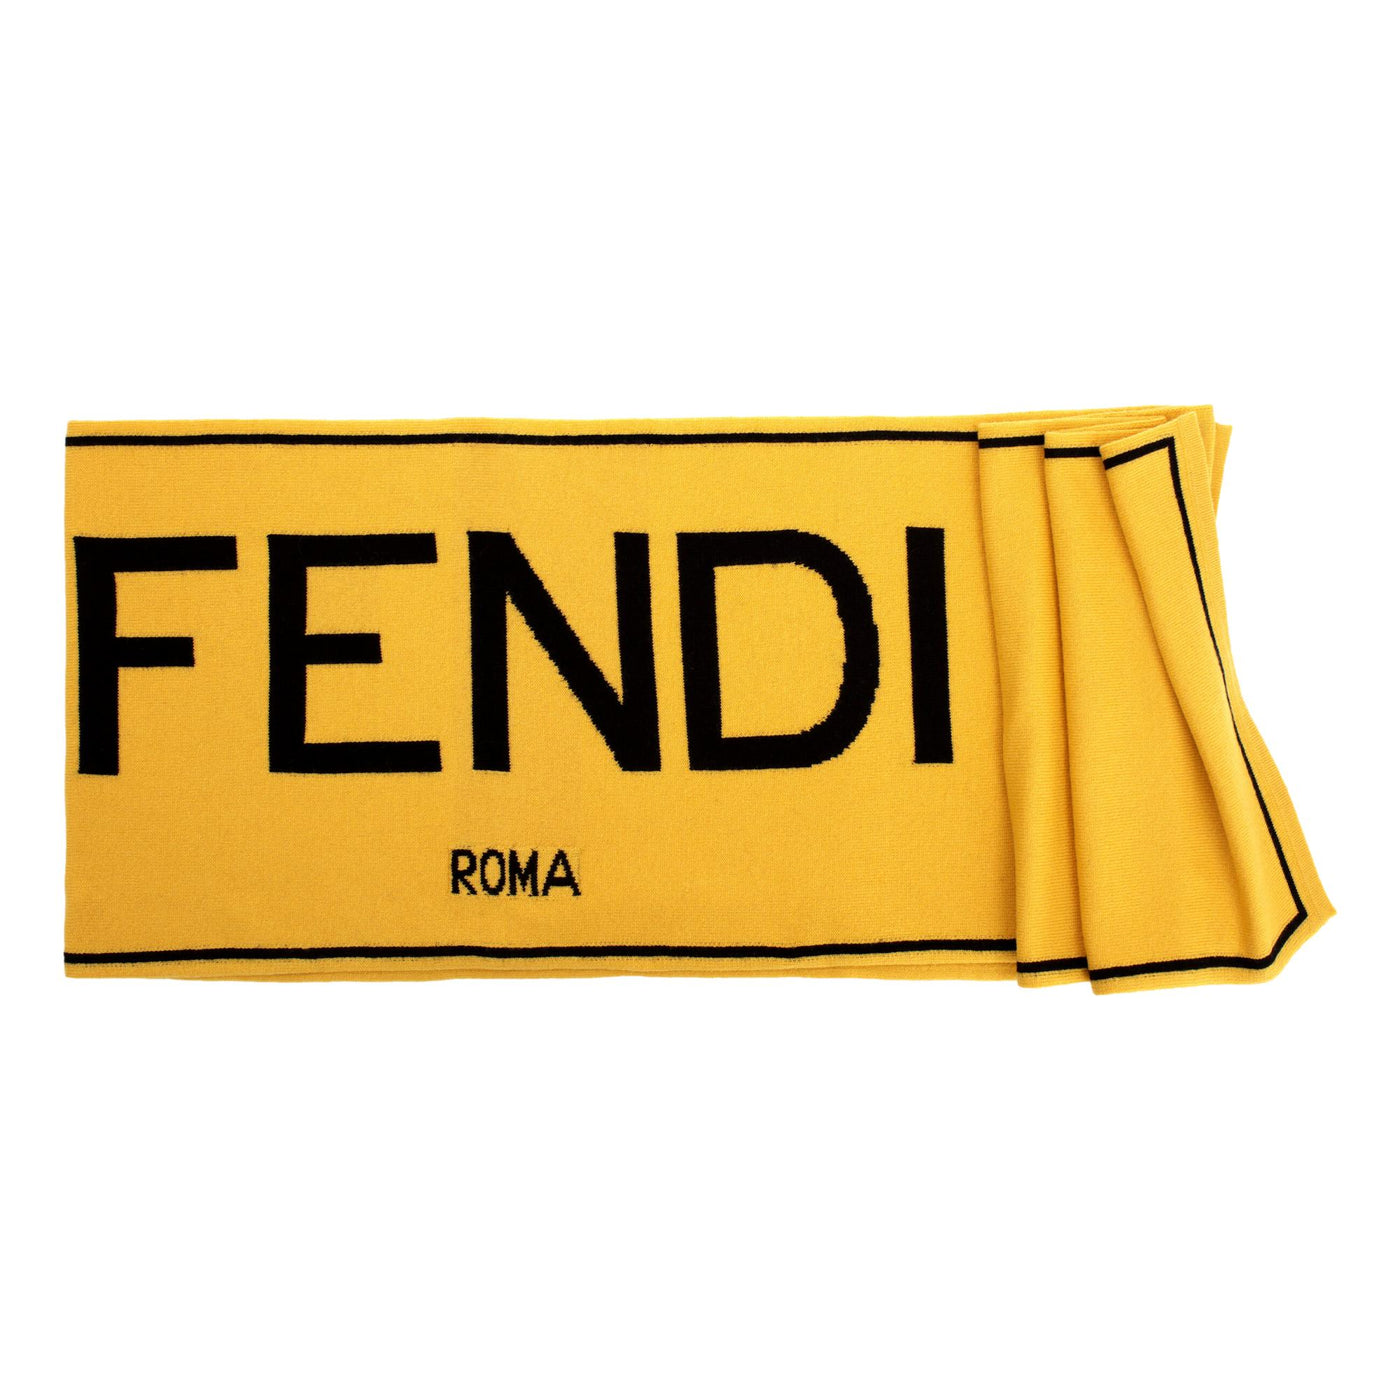 Fendi Roma Knitted Wool & Cashmere Yellow Black Logo Scarf - LUXURYMRKT